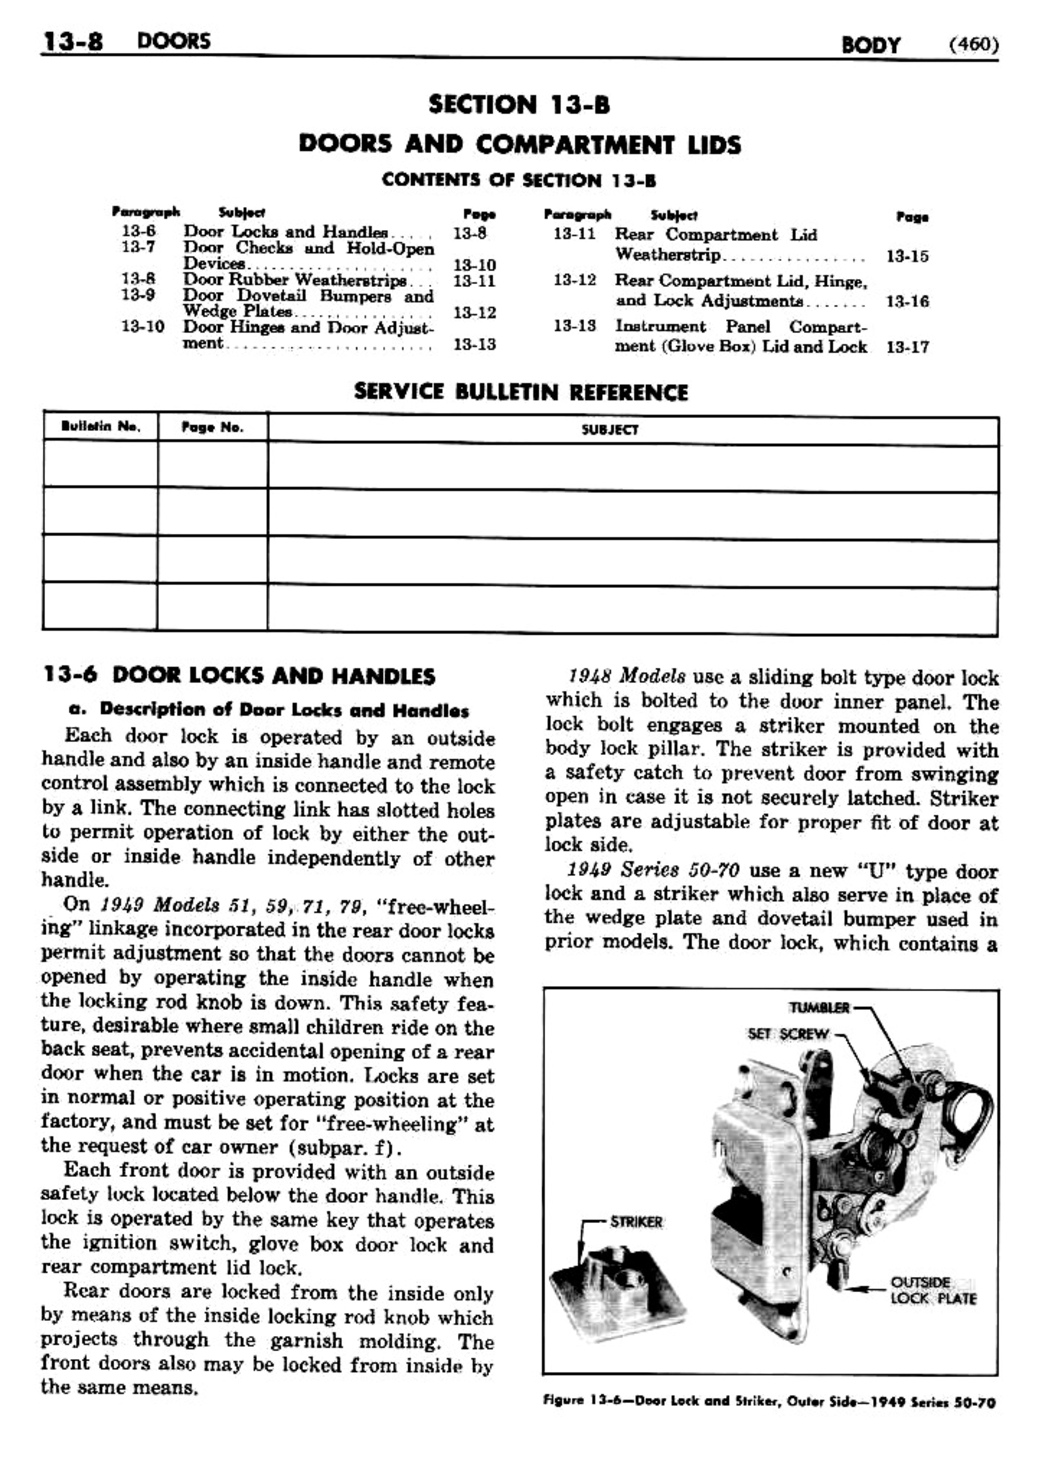 n_14 1948 Buick Shop Manual - Body-008-008.jpg